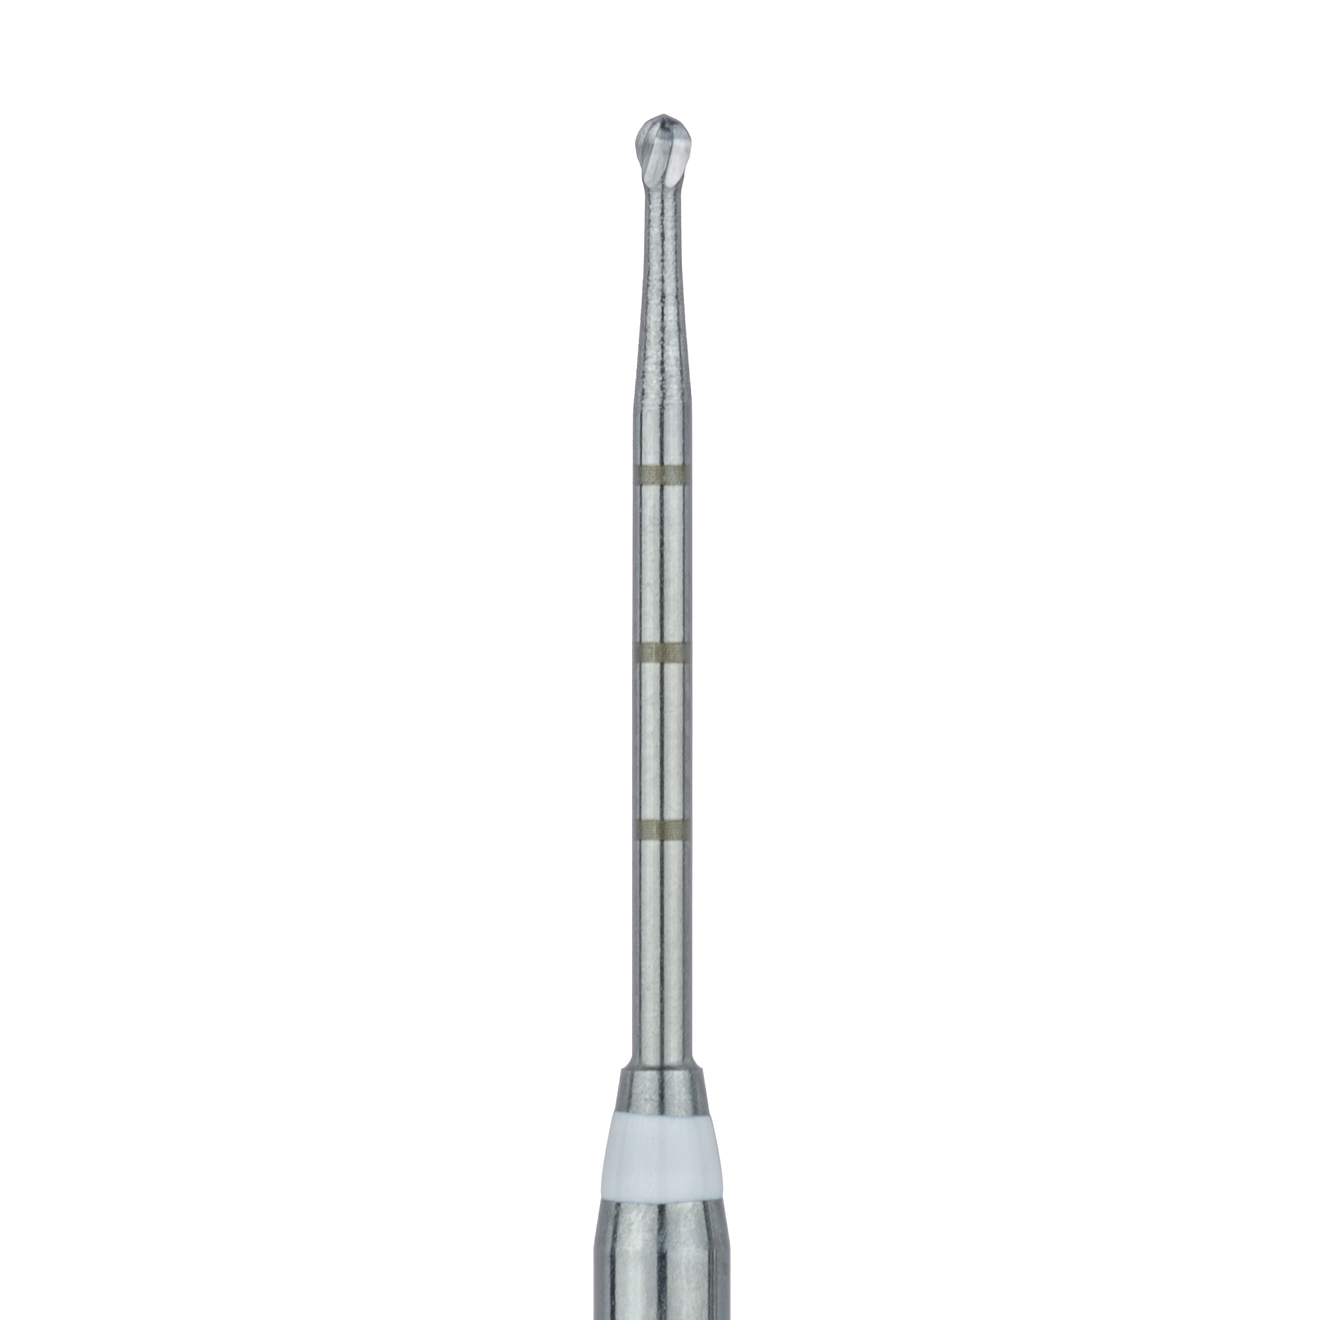 HM191A-010-RAXL Long Neck Endo Access Bur, Carbide Cutting Tip, Round, 1mm Ø, Length 34mm, RA